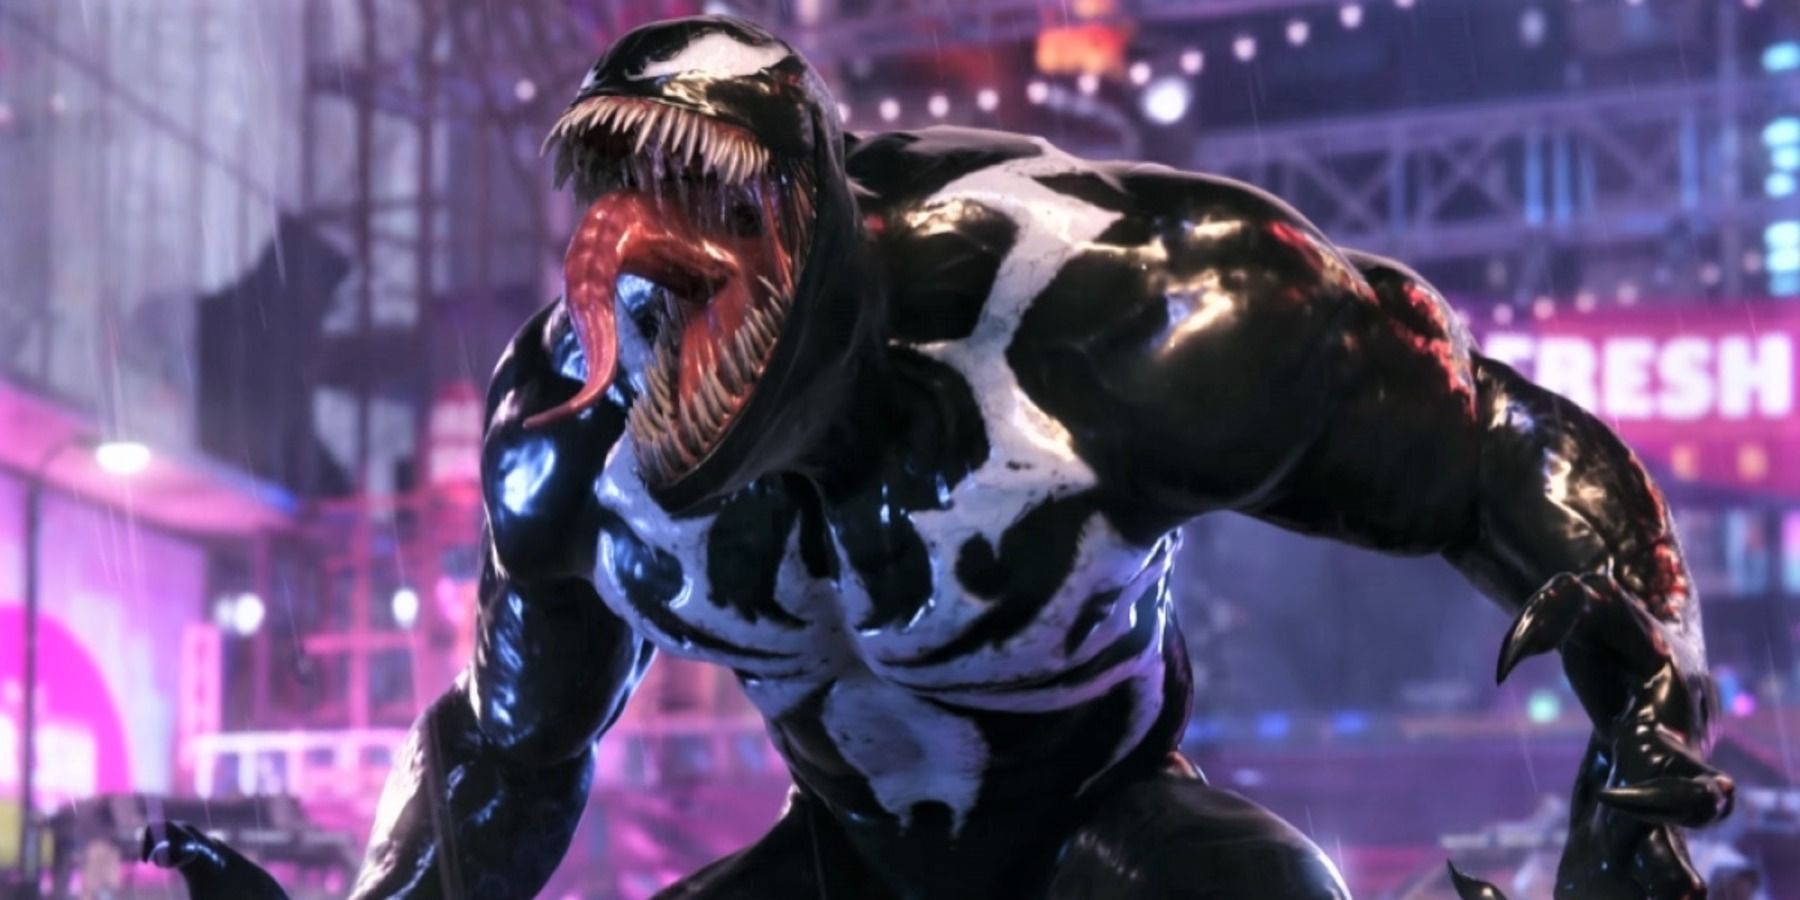 Marvel's Spider-Man 2: Tony Todd's Venom Voice Scared The Rest Of The Cast  - Gameranx